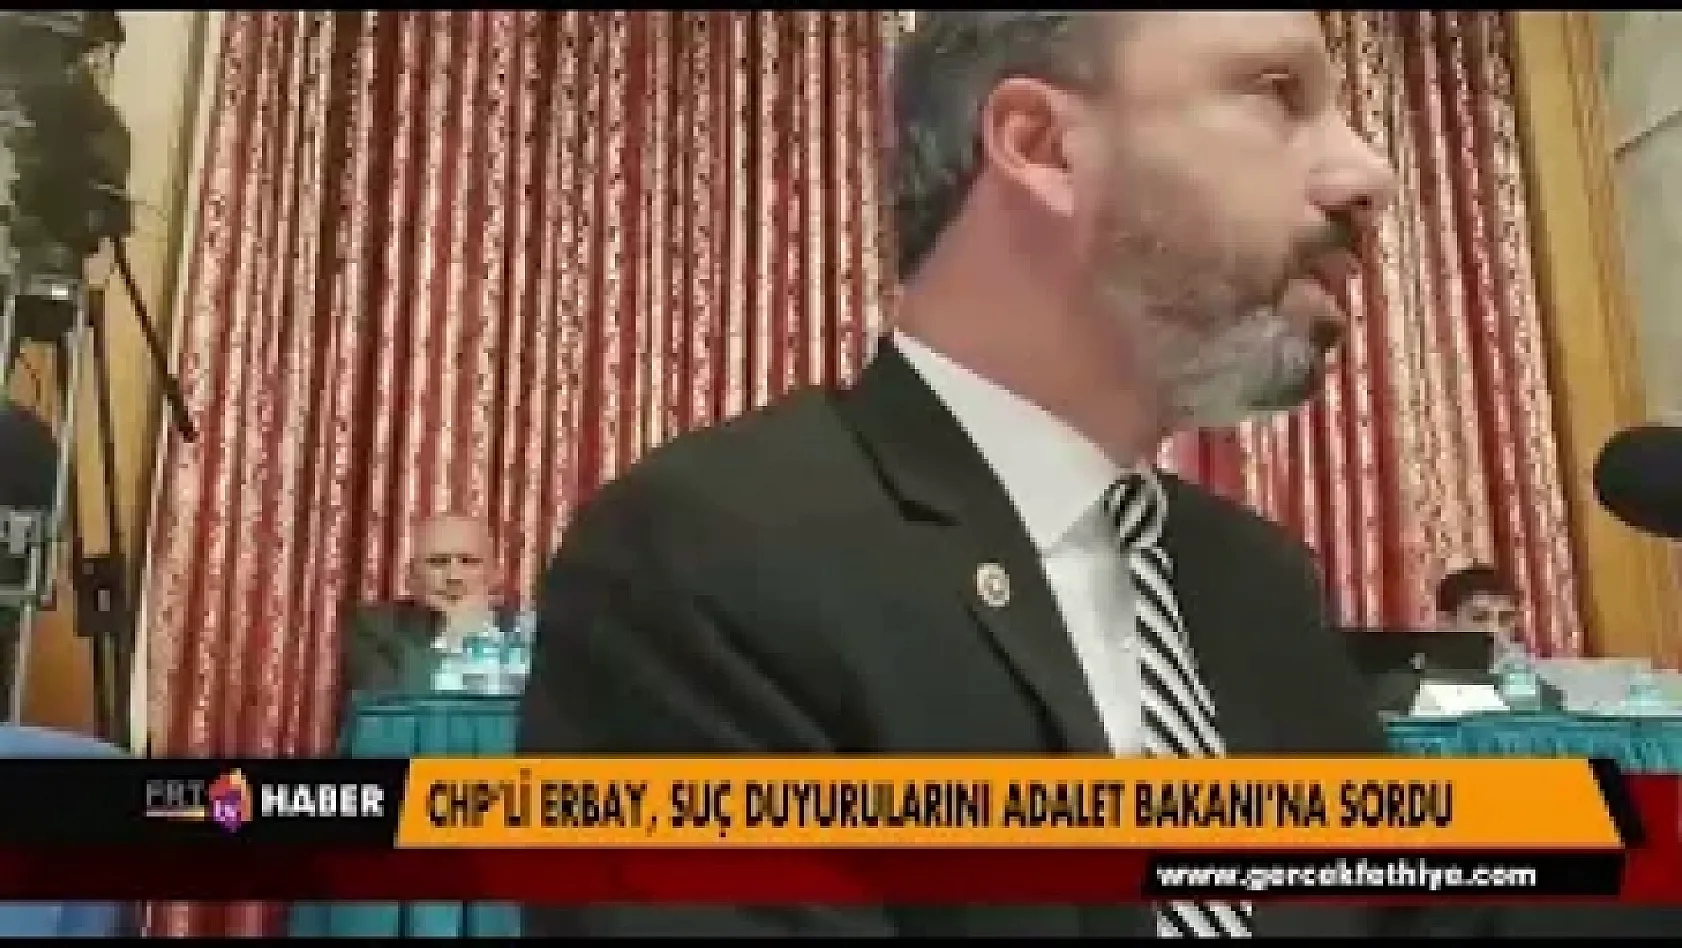 CHP'Lİ ERBAY, SUÇ DUYURULARINI ADALET BAKANI'NA SORDU